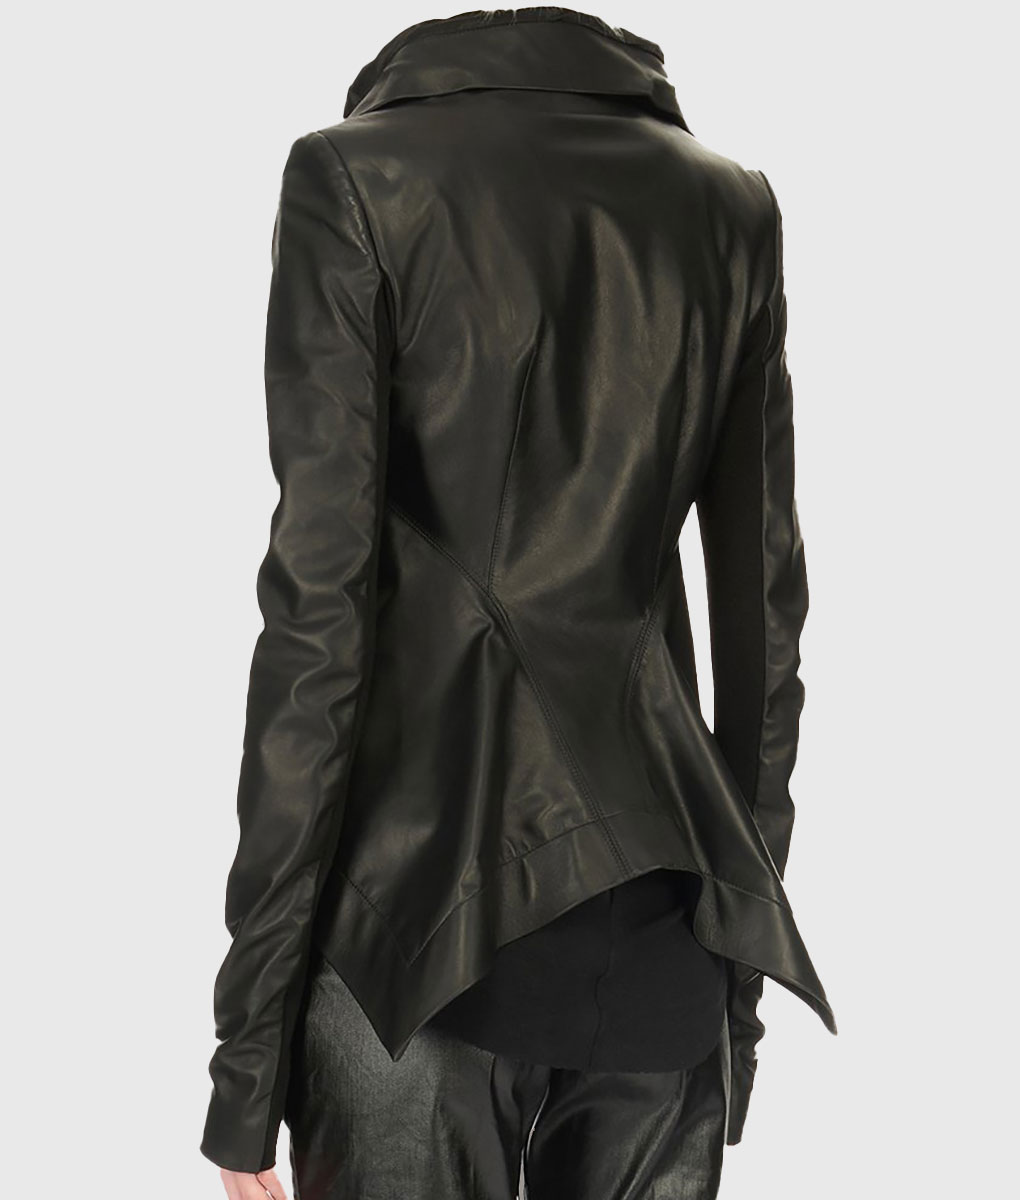 Taylor Swift Owens Black Leather Jacket (5)